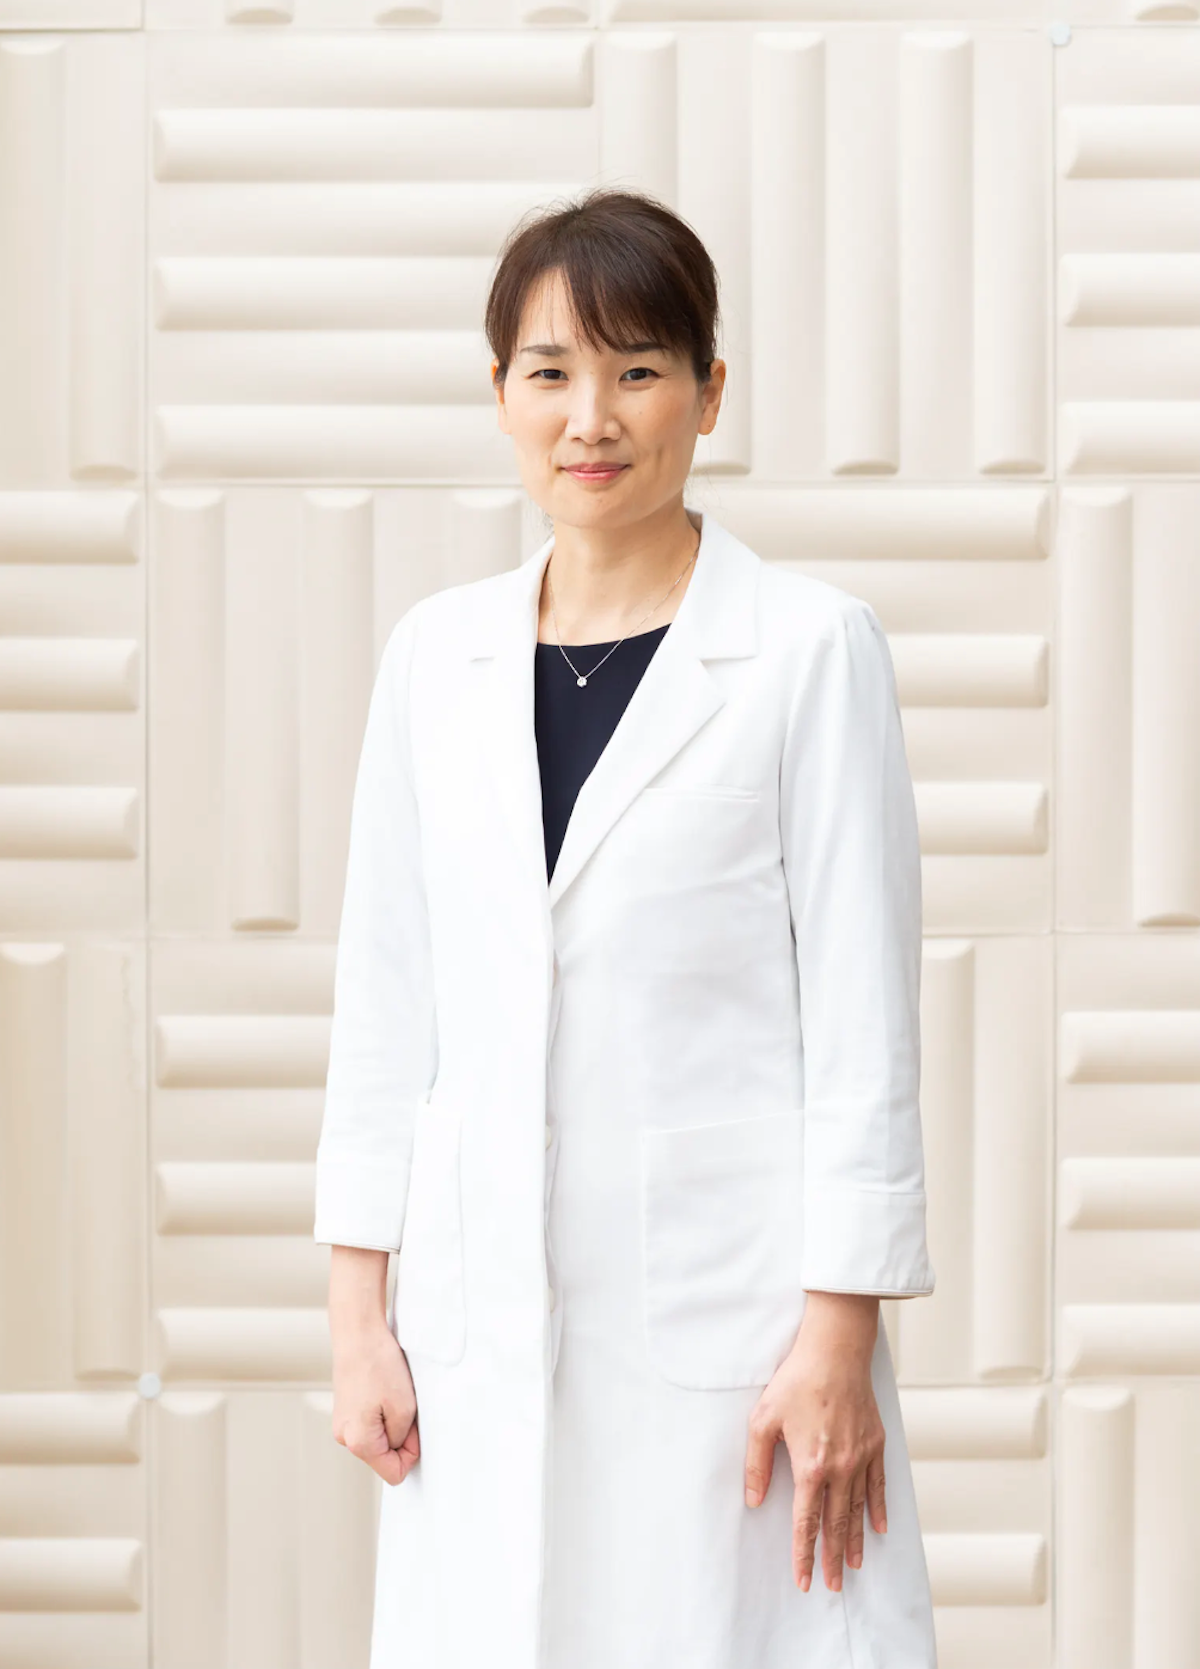 Kaori Sayanagi, MD, PhD, lead researcher on the study conducted at Department of Ophthalmology, Osaka University Medical School, Osaka, Japan. (Image Courtesy of Kaori Sayanagi, MD, PhD)